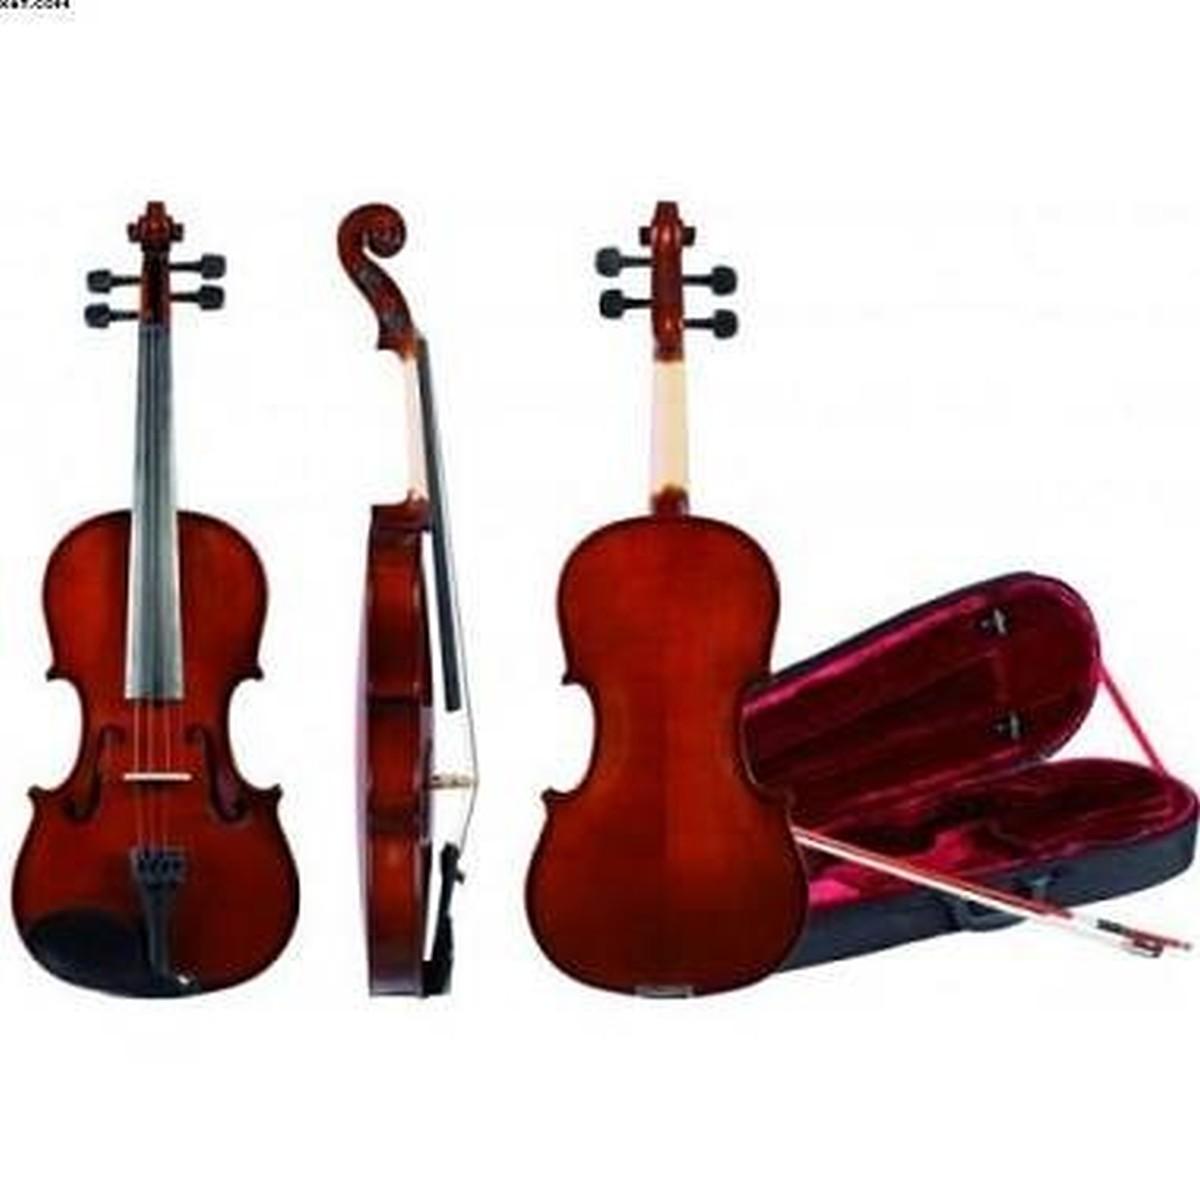 Roling's hdv1134 violino student 3/4